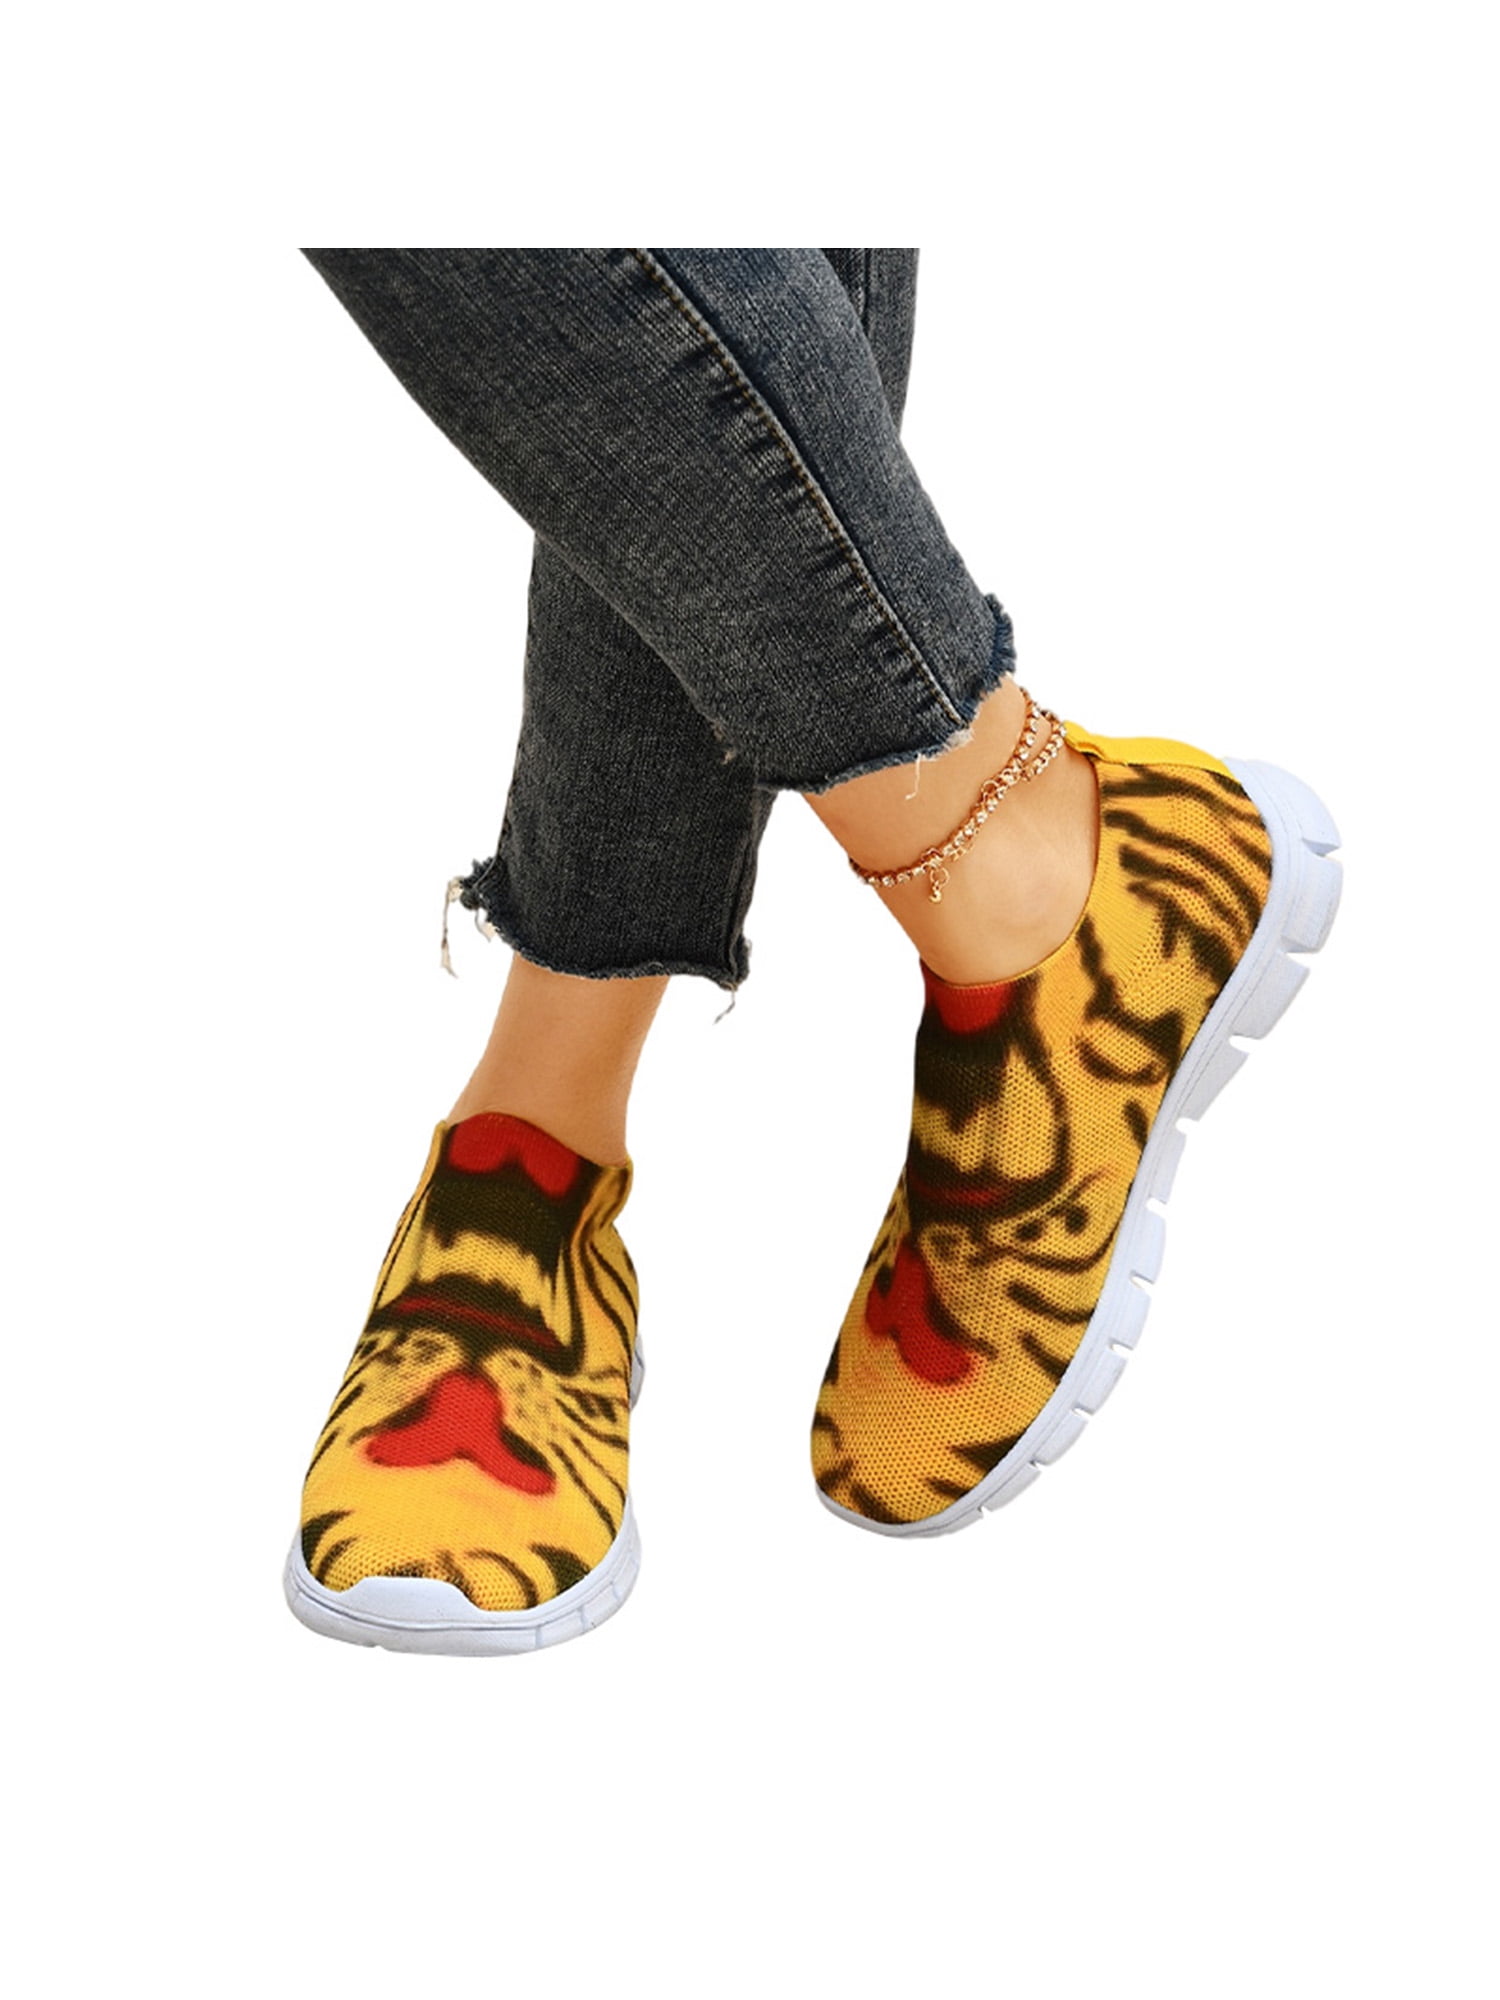 WSKEISP Womens Flower Print Patent Flats Round Toe Slip On Walking Loafer Flat Shoes 